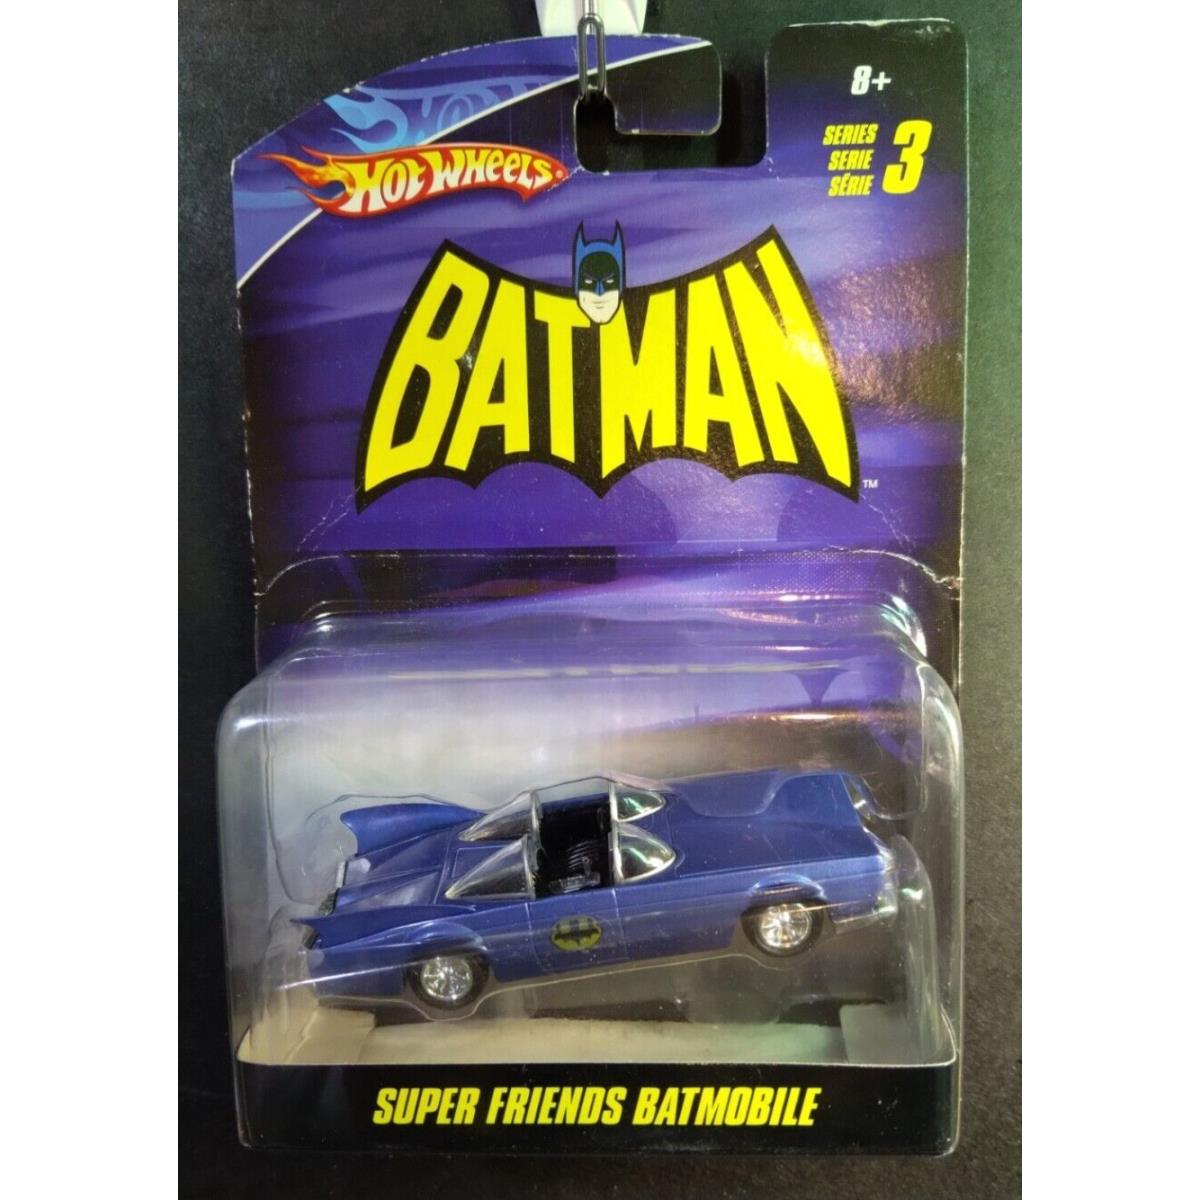 2009 Hot Wheels Batman Super Friends Batmobile Series 3 Vhtf